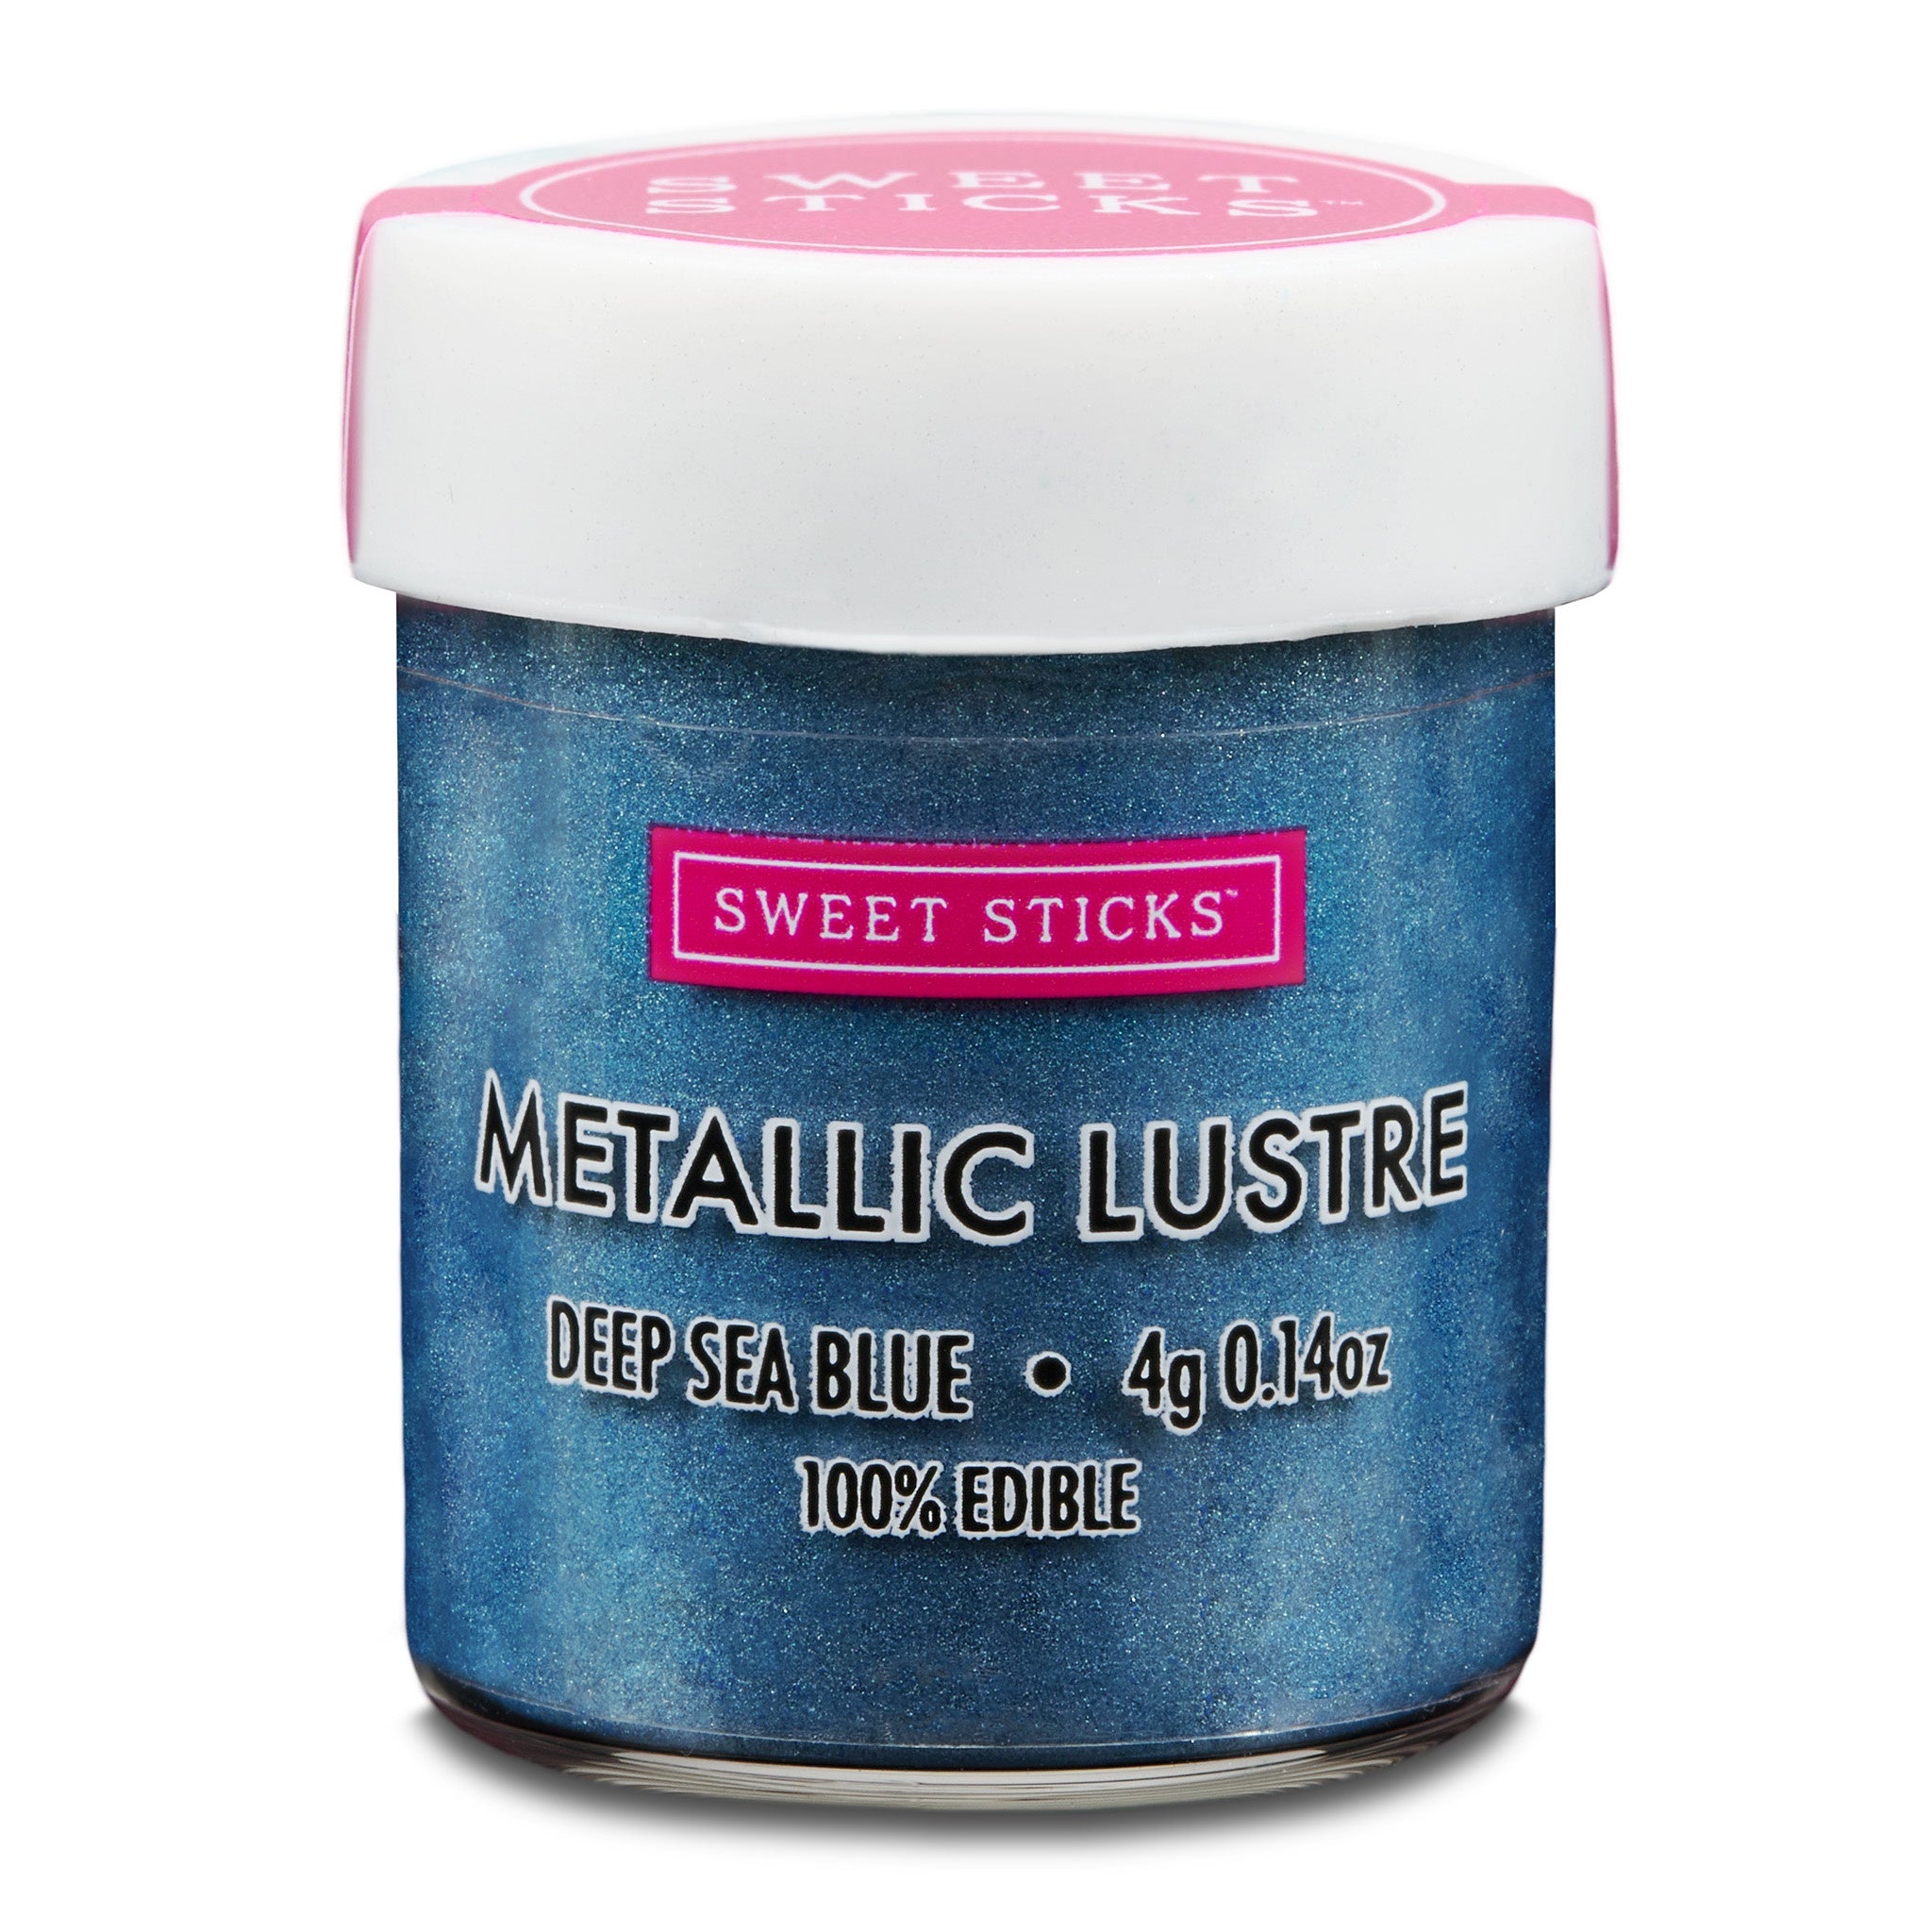 Sweet Sticks Metallic Lustre 4g - Deep Sea Blue